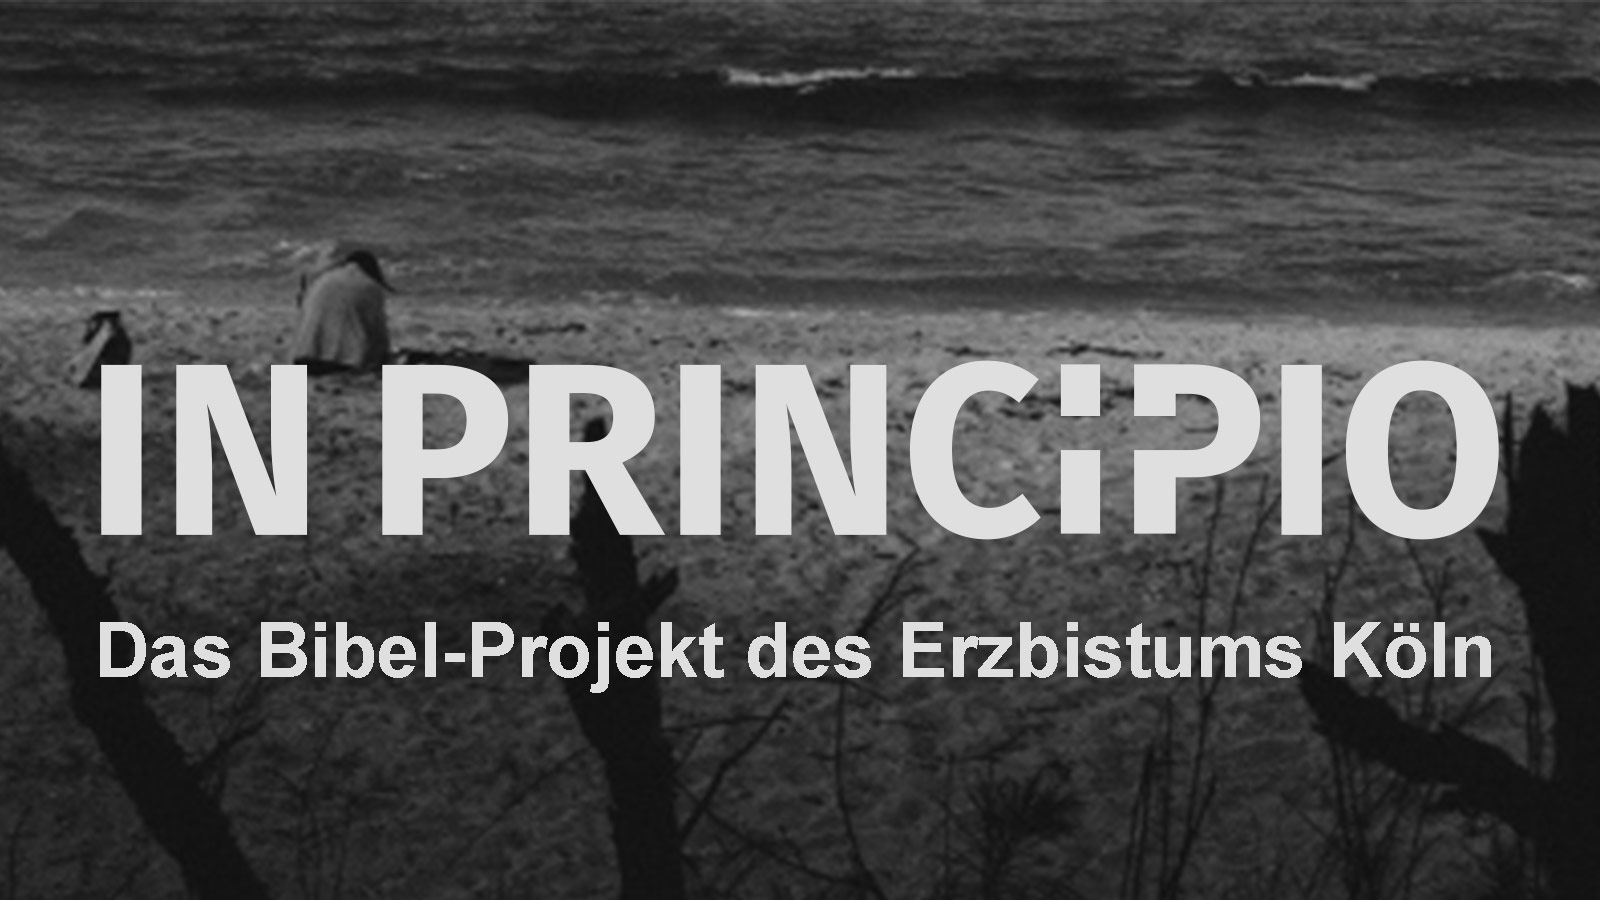 IN PRINCIPIO: Bibel-Projekt des Erzbistums Köln